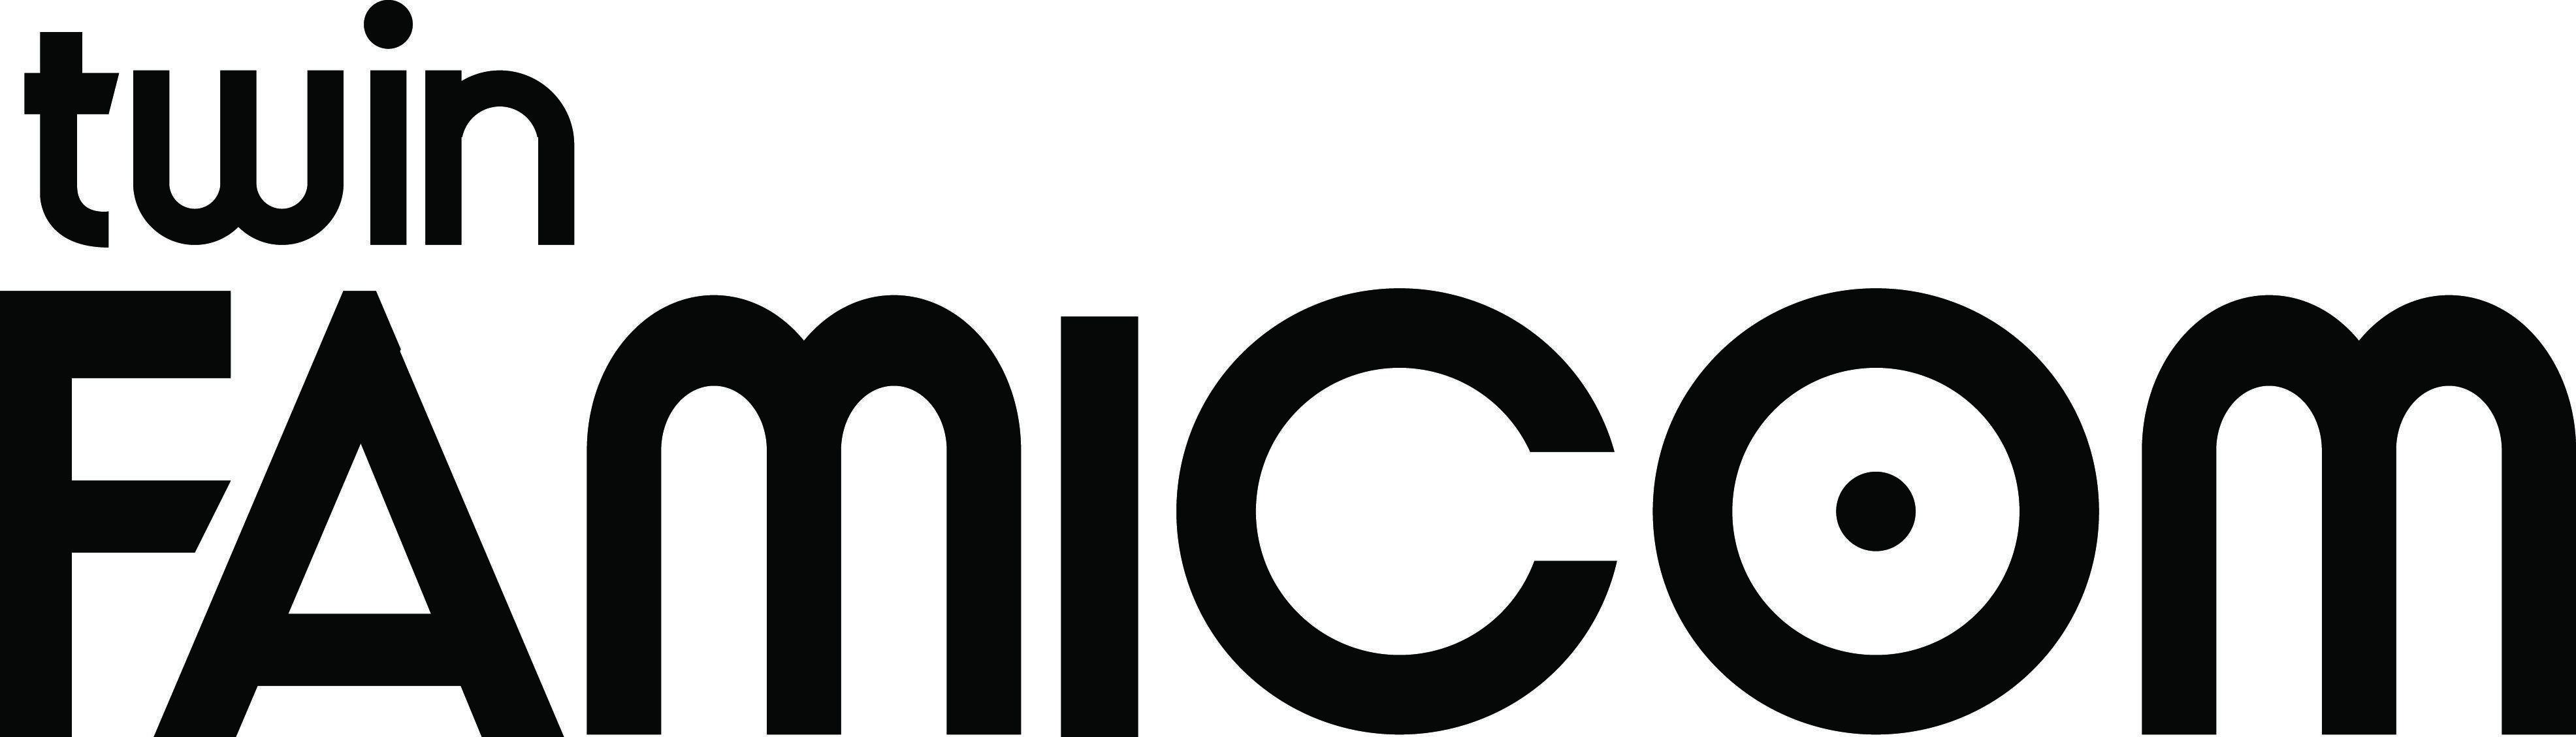 Famicom Logo - Twin Famicom font